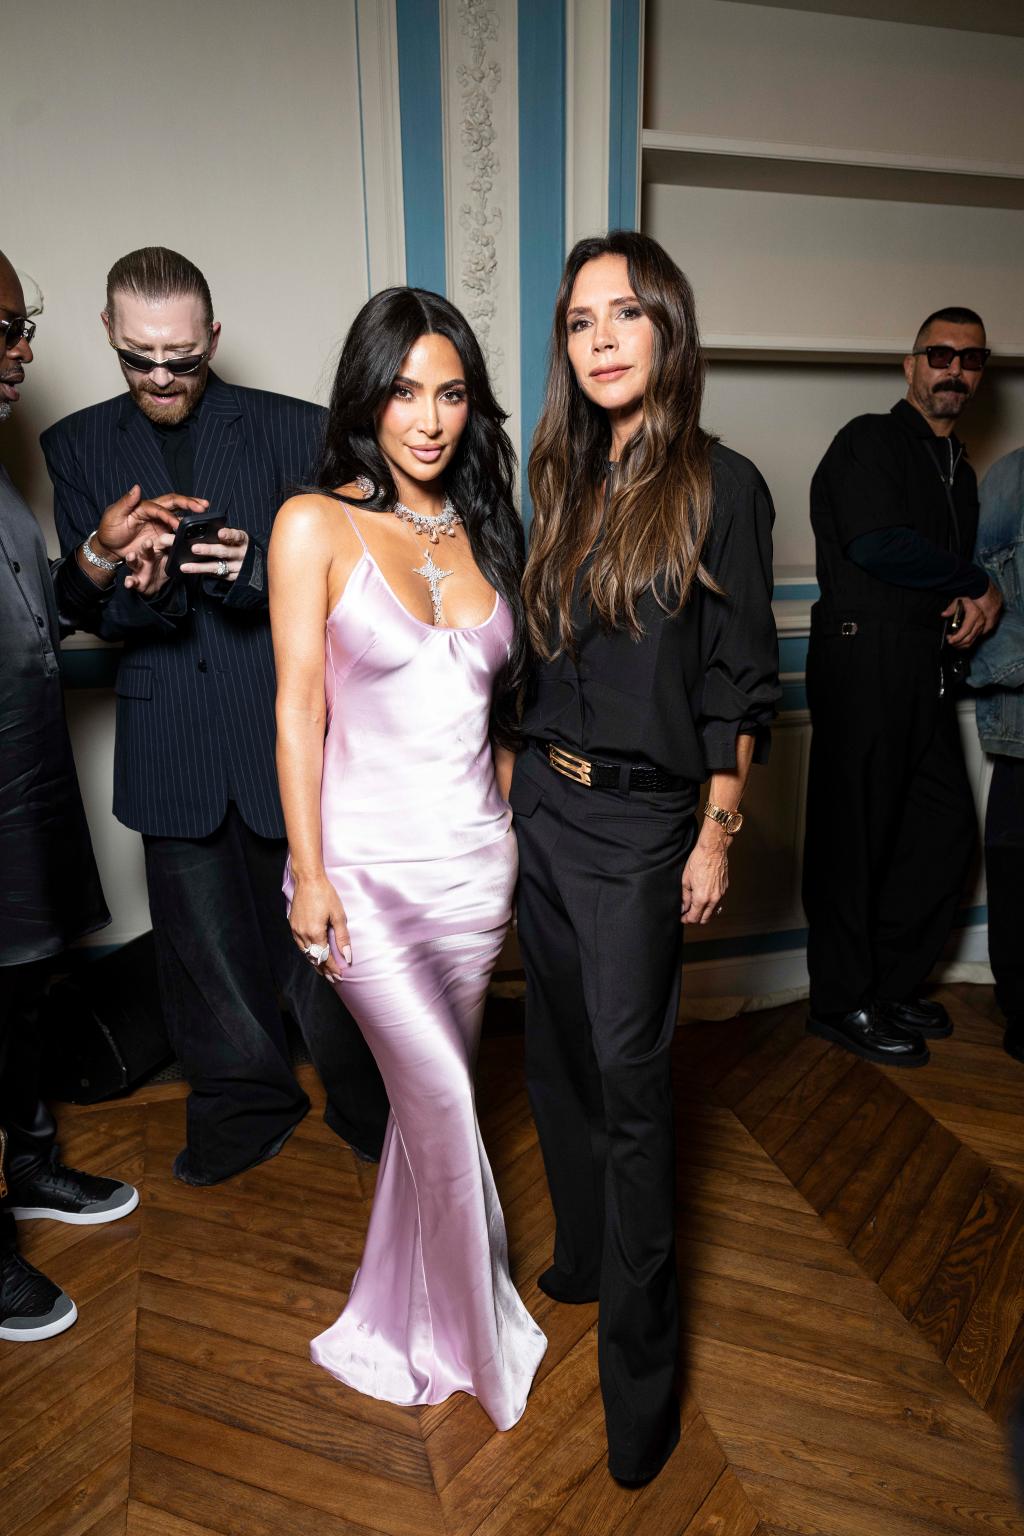 Kim Kardashian's Fashionably Late Entrance Ruffles Anna Wintour's Feathers